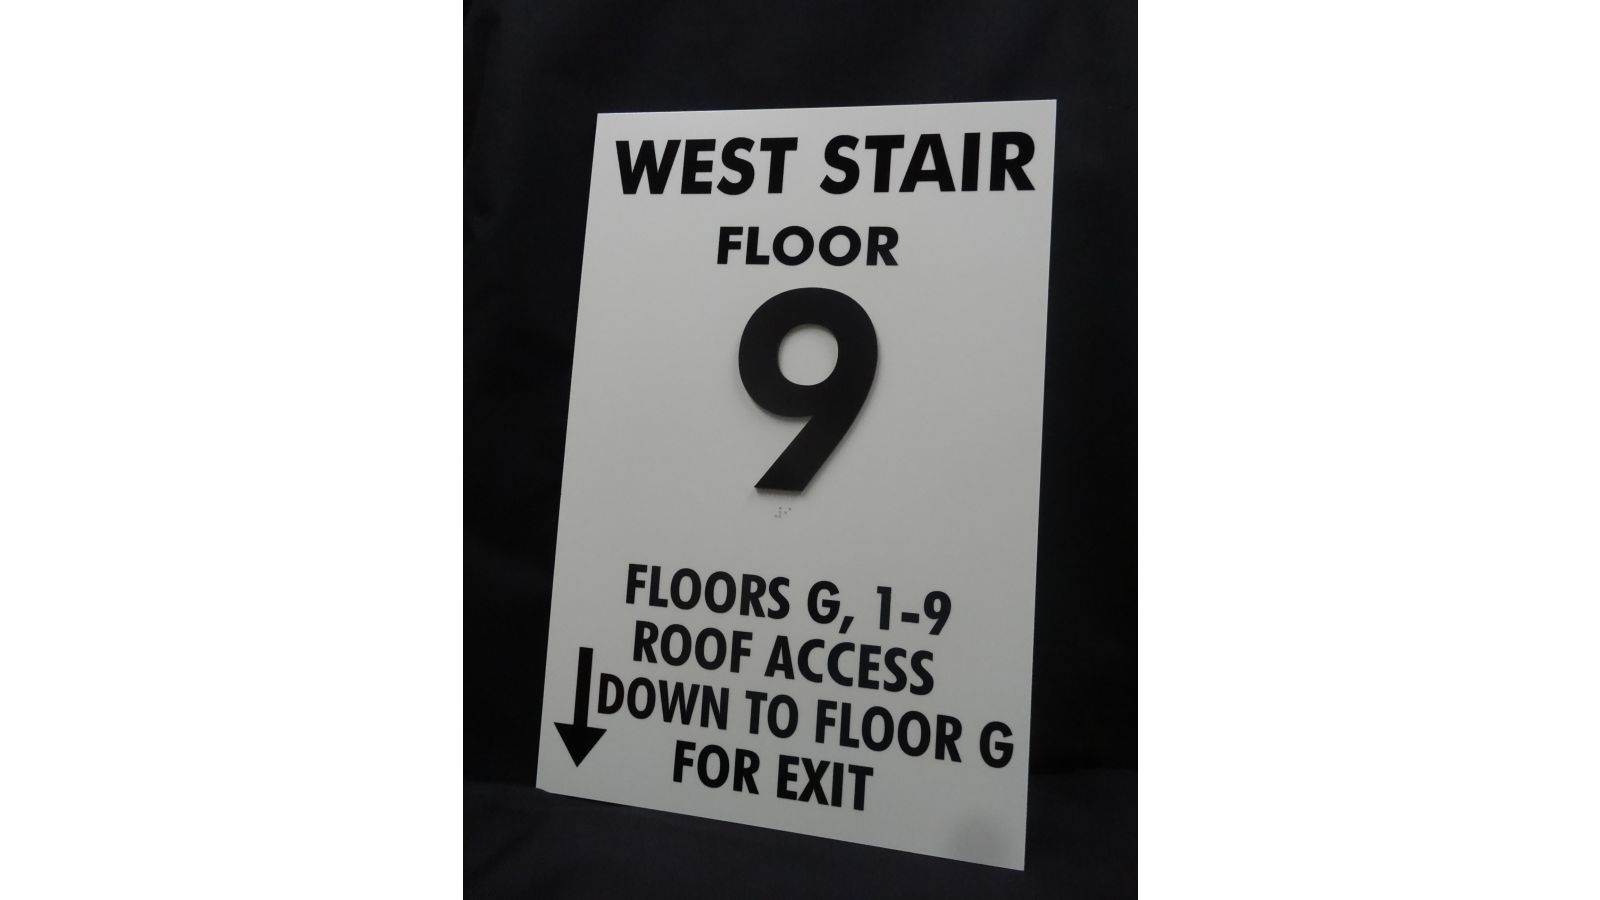 Floor Identification Signs that glow in the dark